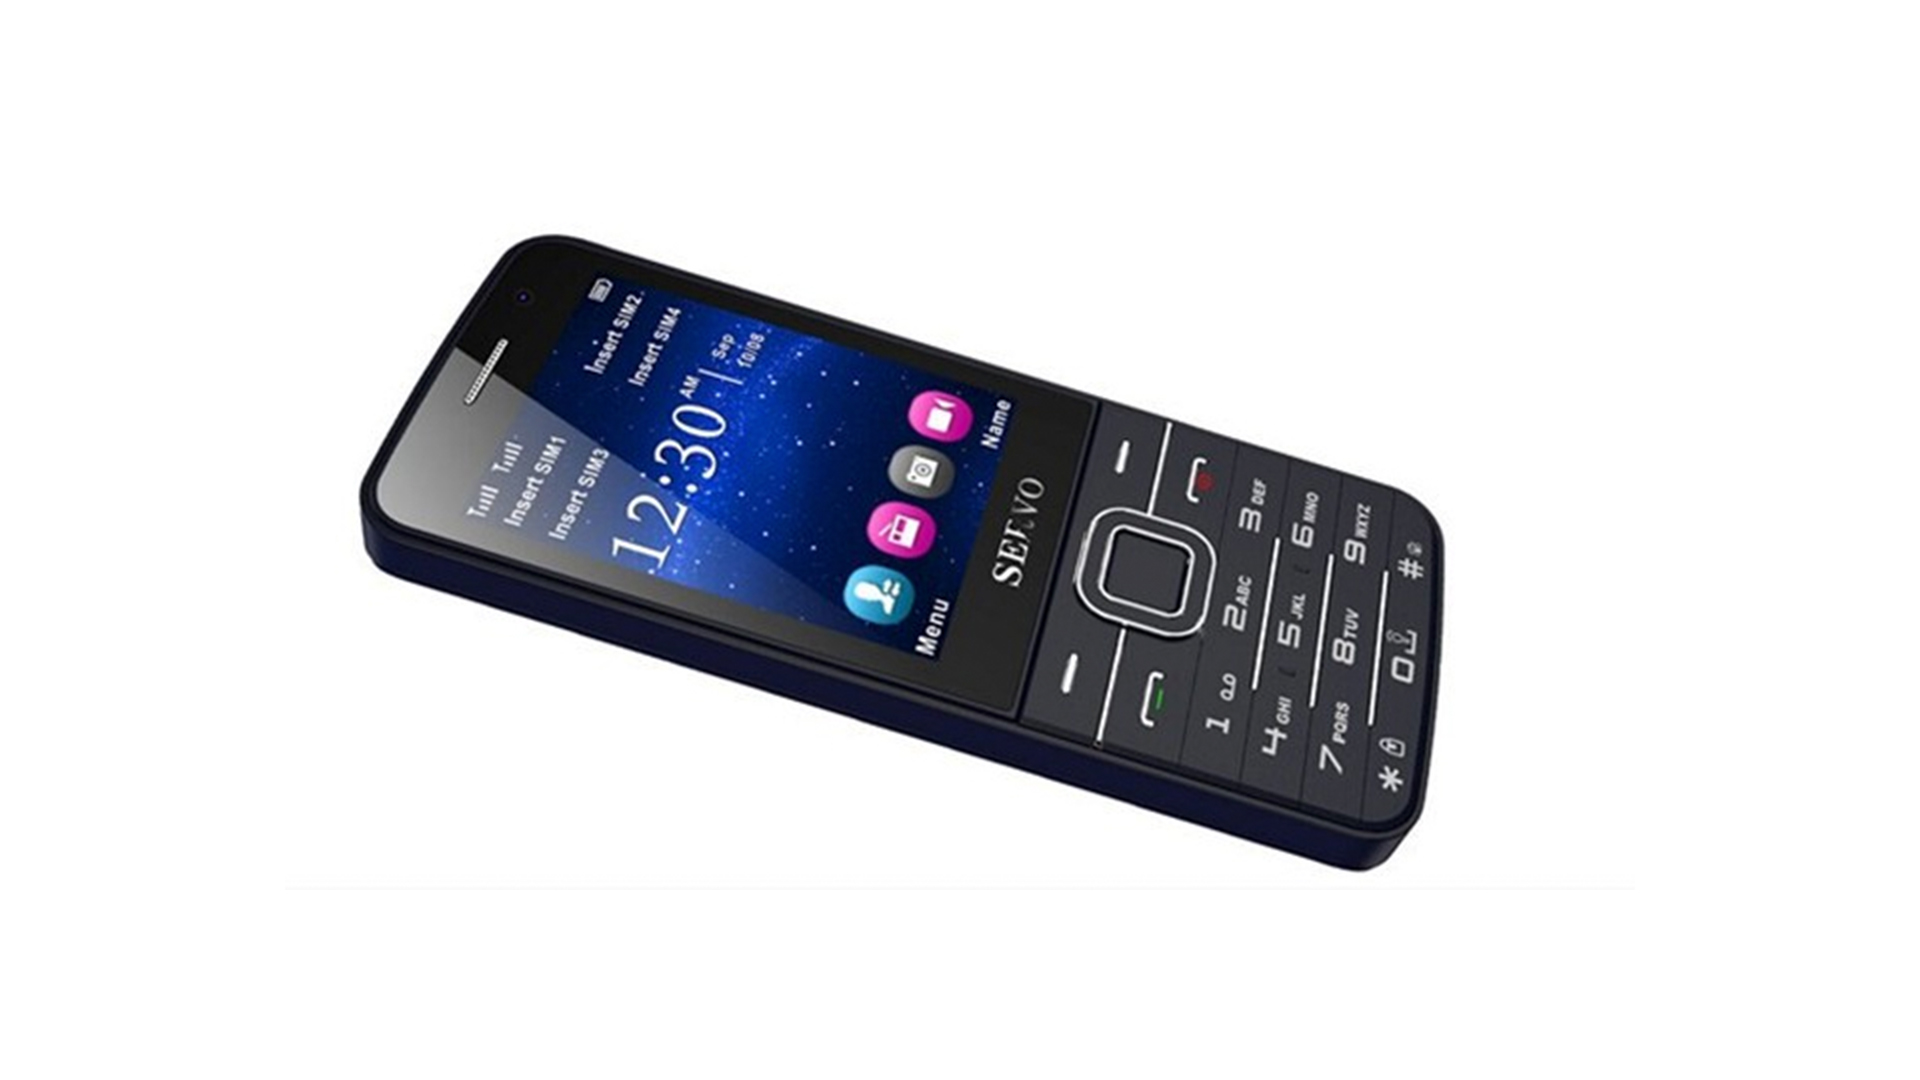 SERVO V9500 Waterproof Phone! – Technology and Helpful Articles